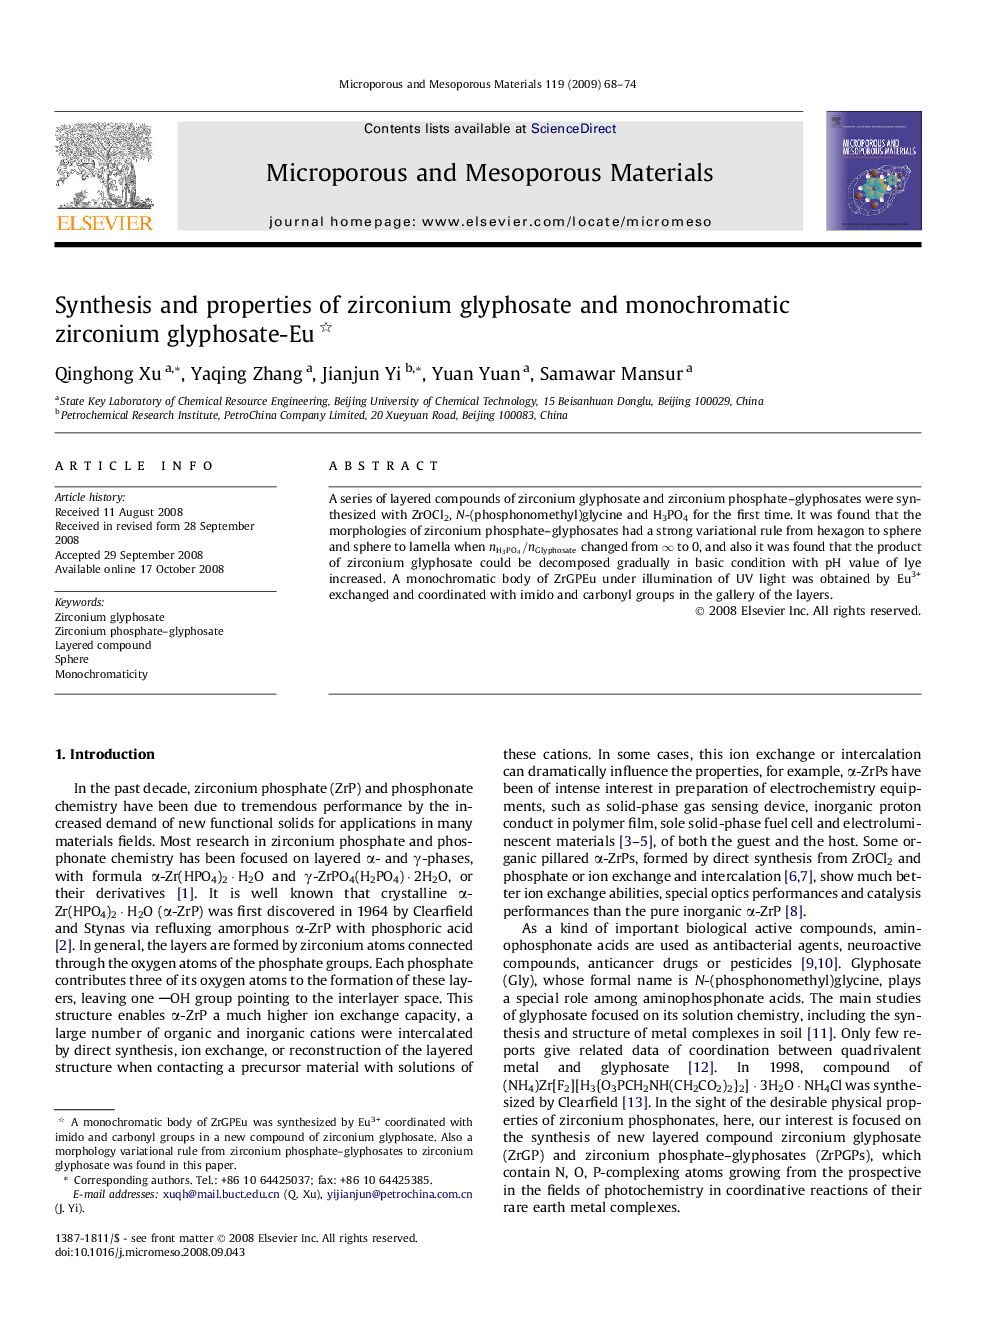 Synthesis and properties of zirconium glyphosate and monochromatic zirconium glyphosate-Eu 